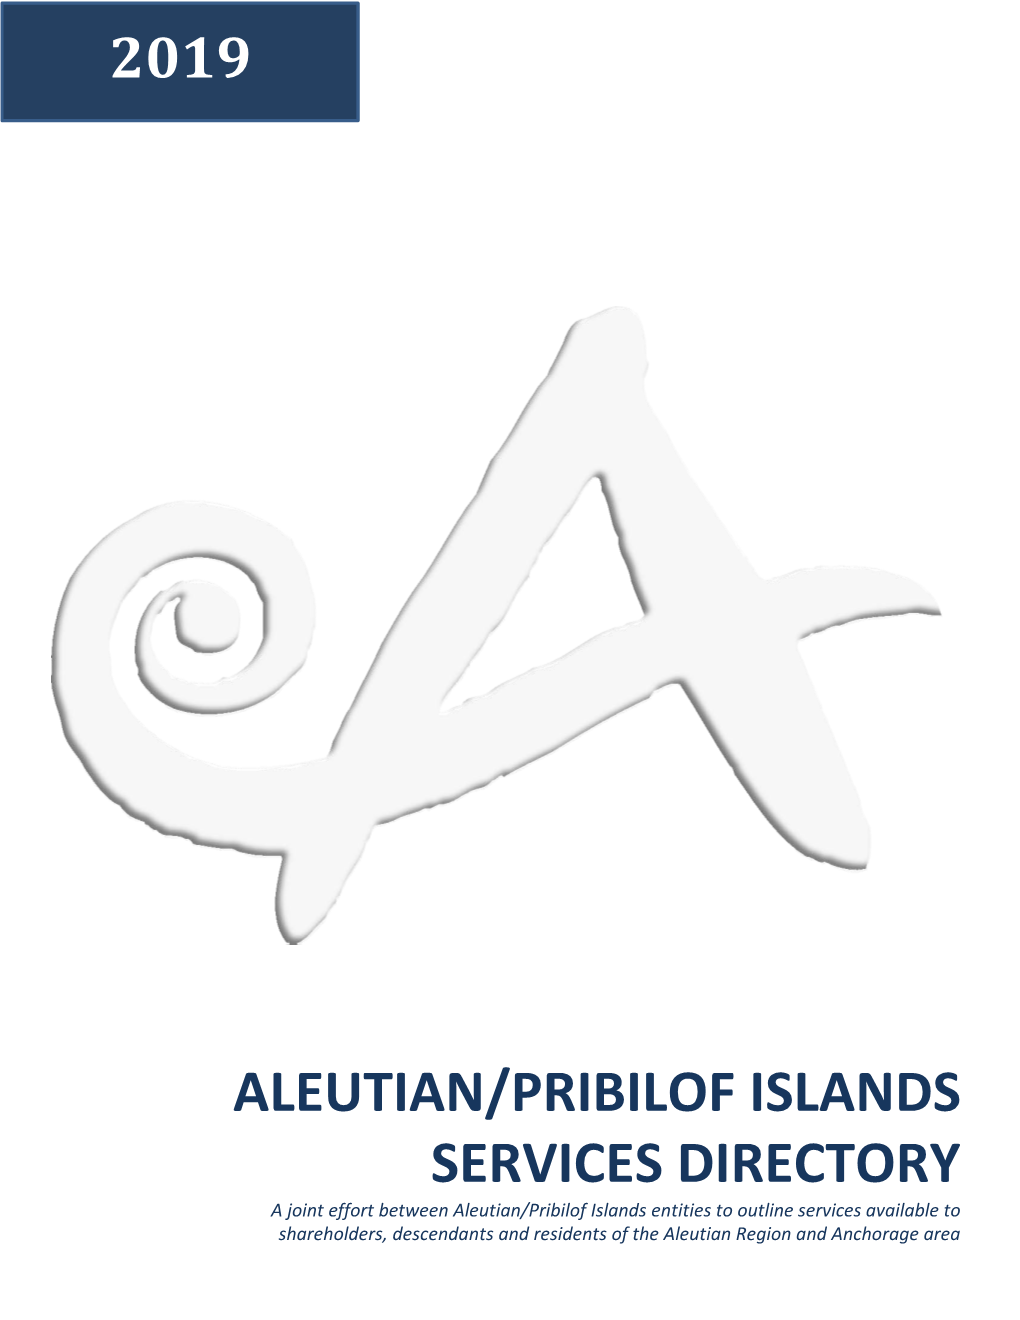 Aleutian / Pribilof Islands Services Directory